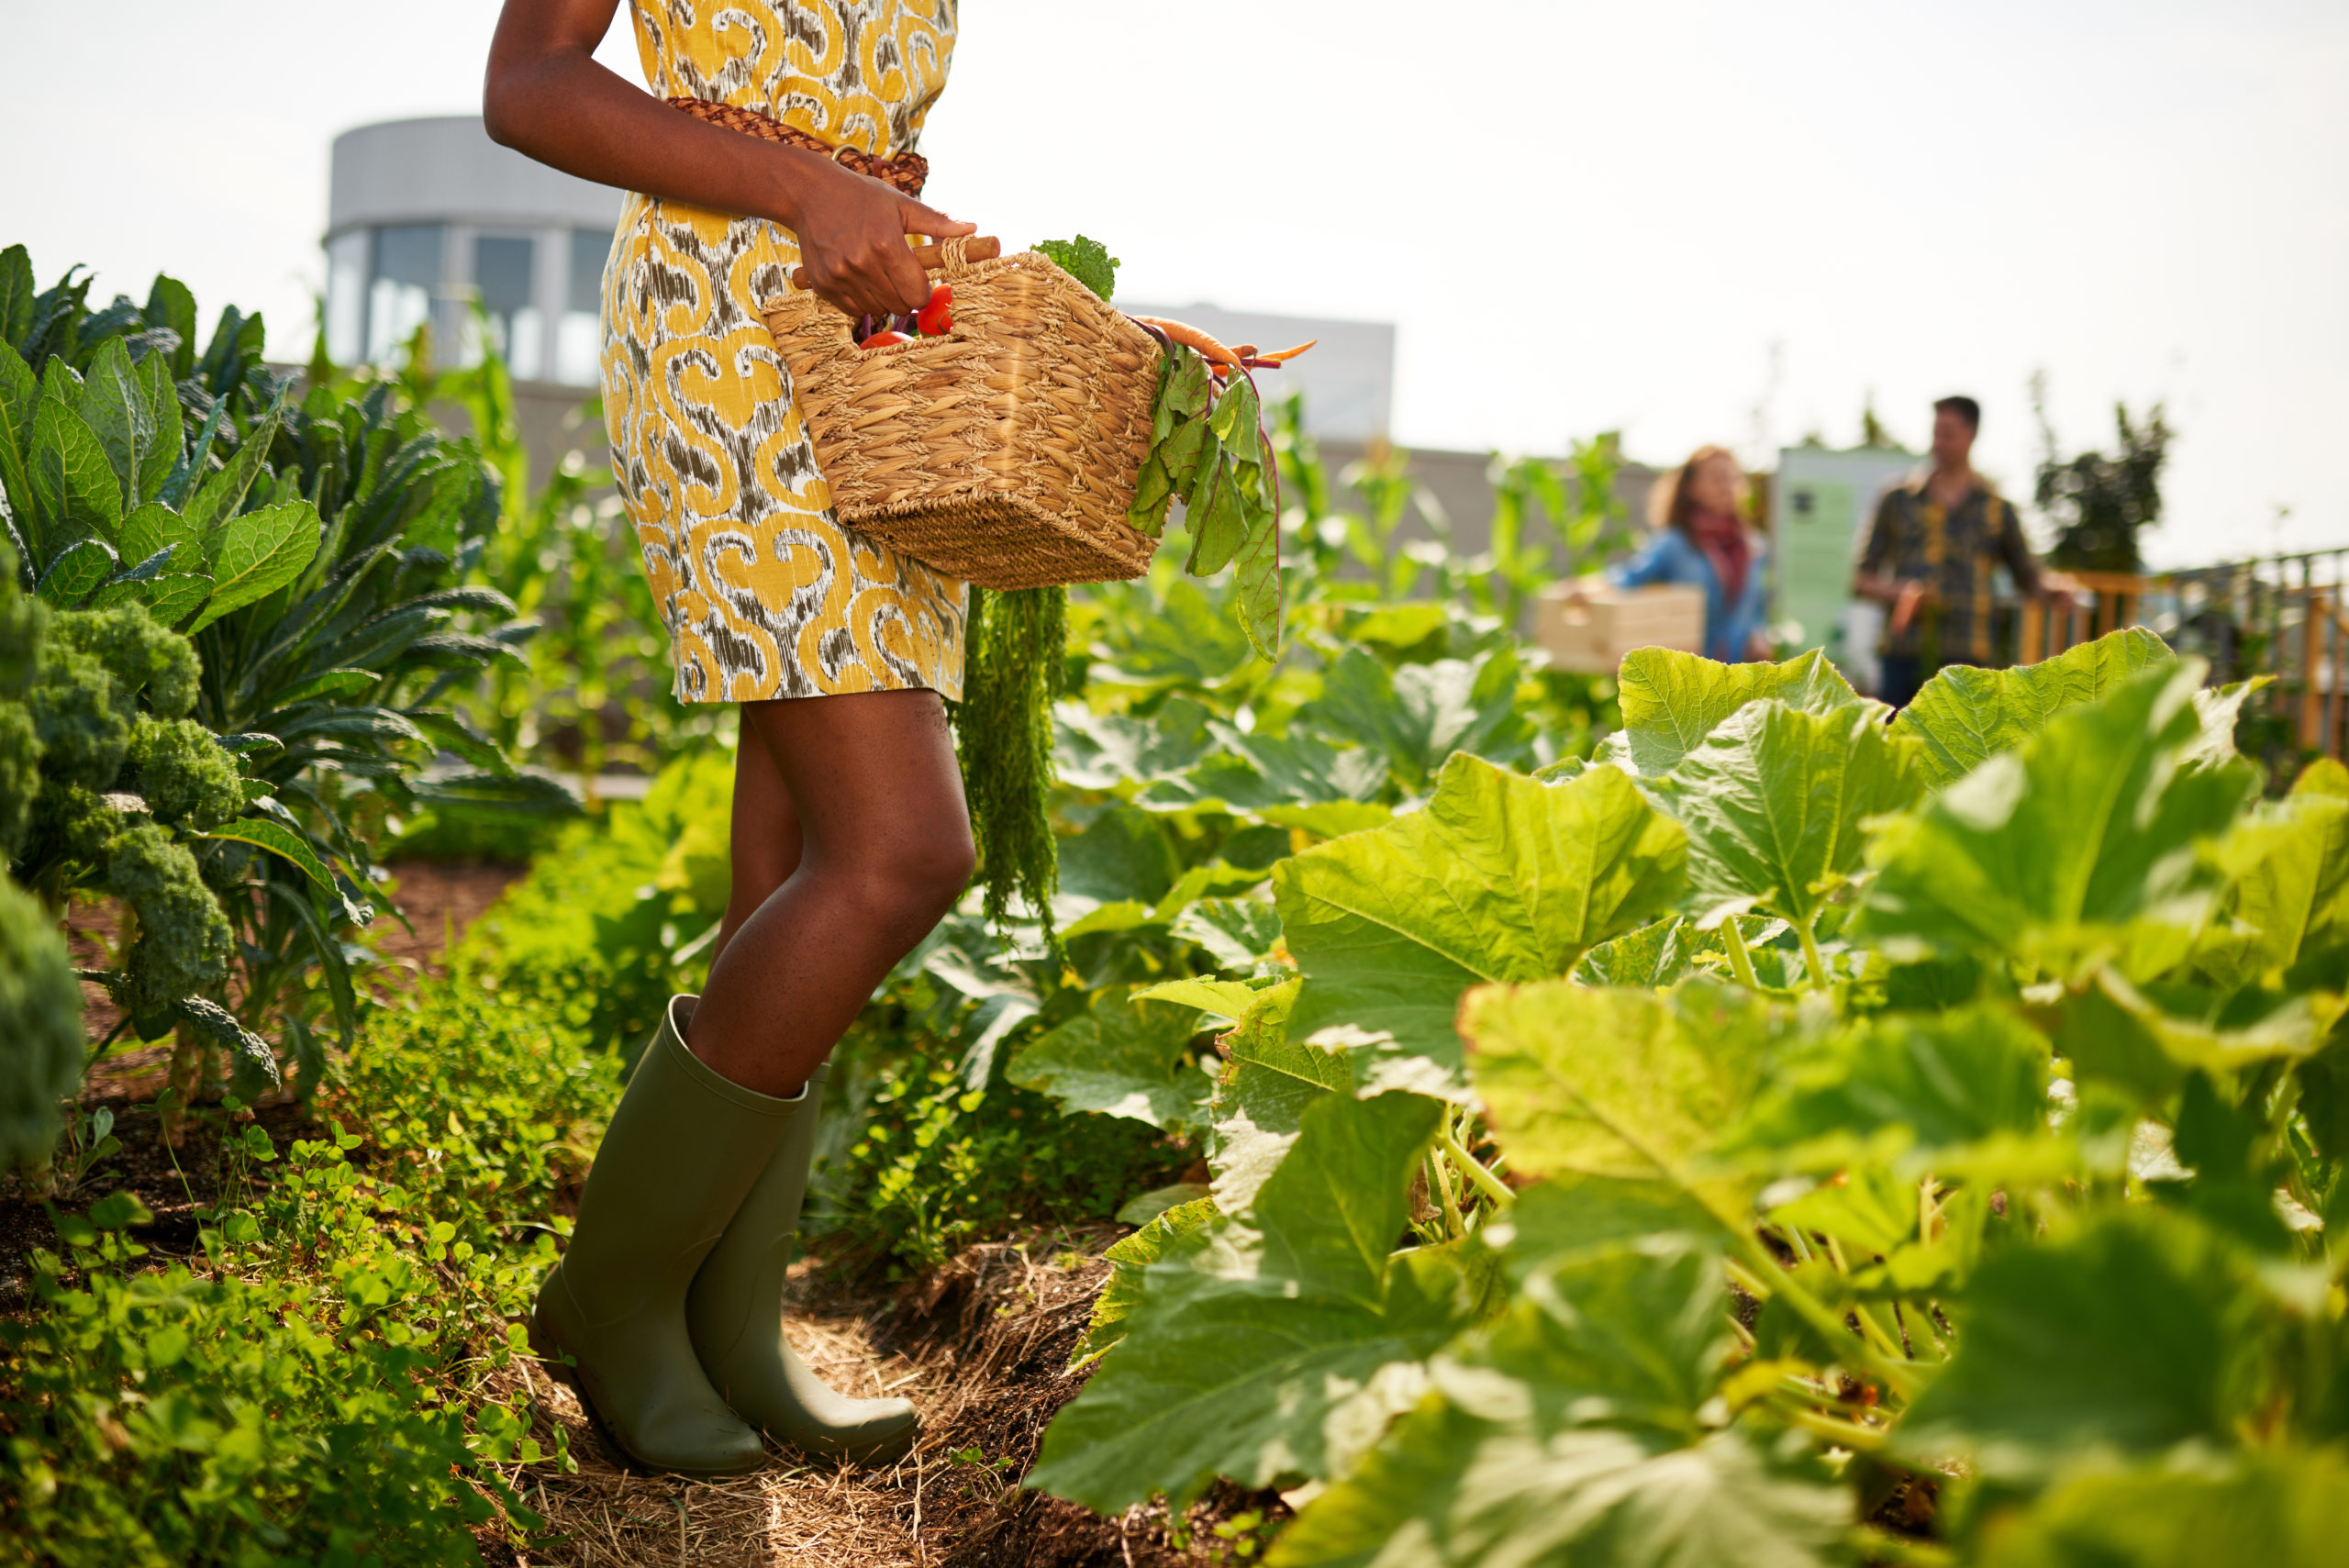 Leg details of Black female gardener tending to organic crops at community garden and picking up a basket full of produce